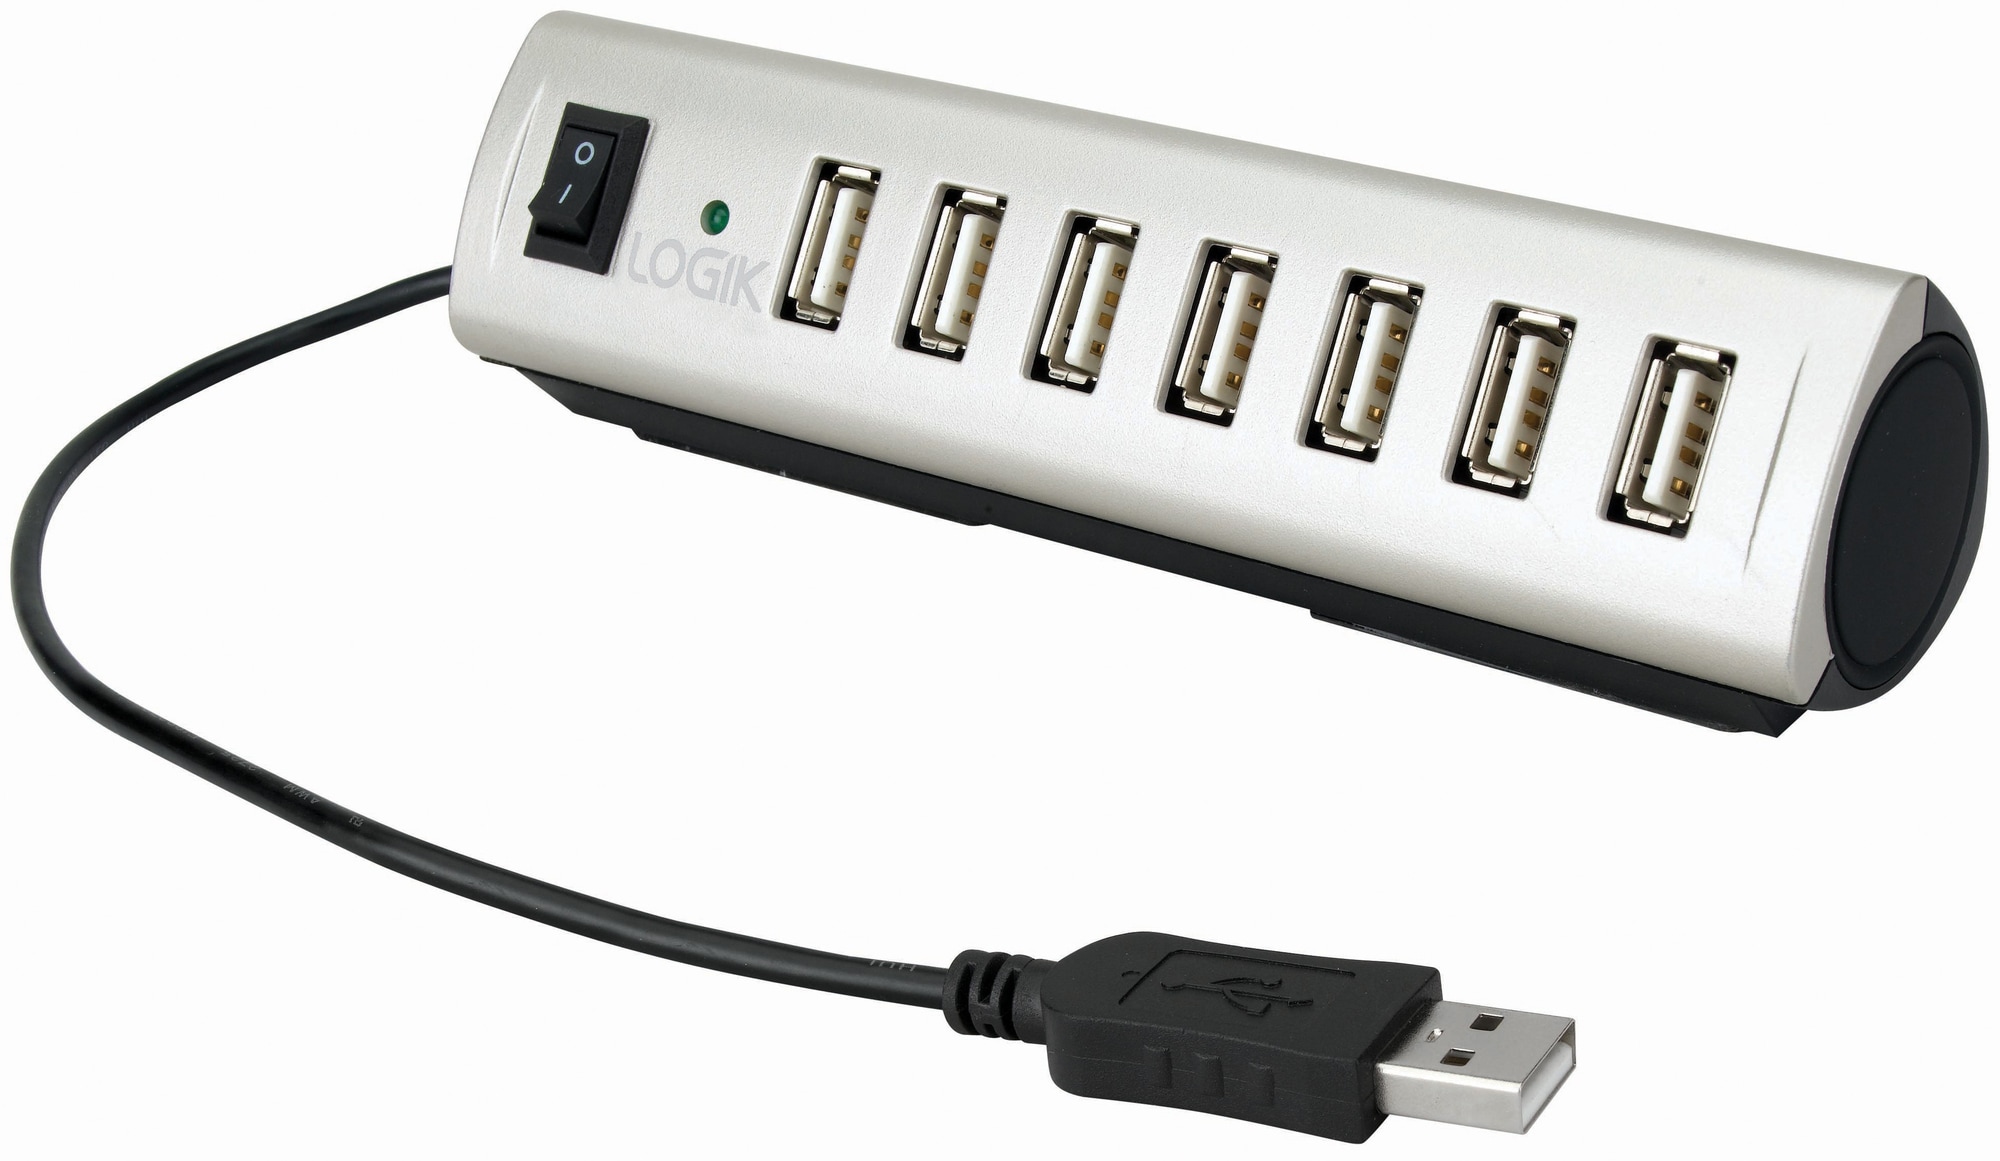 Logik 7-port USB 2.0 hub | Elgiganten